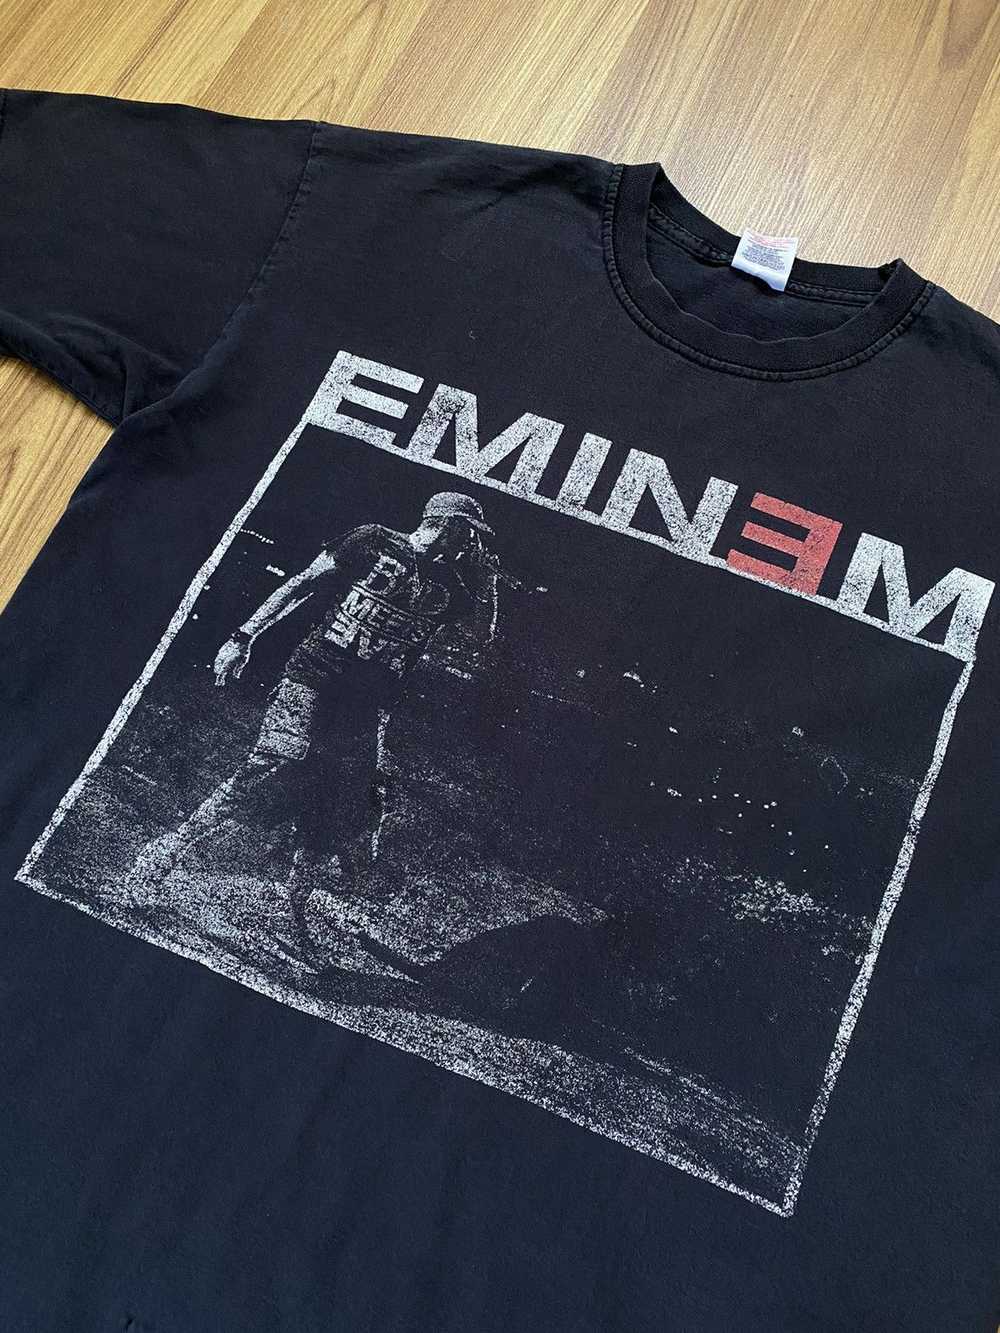 Band Tees × Eminem × Rap Tees Eminem Detroit Tour… - image 2